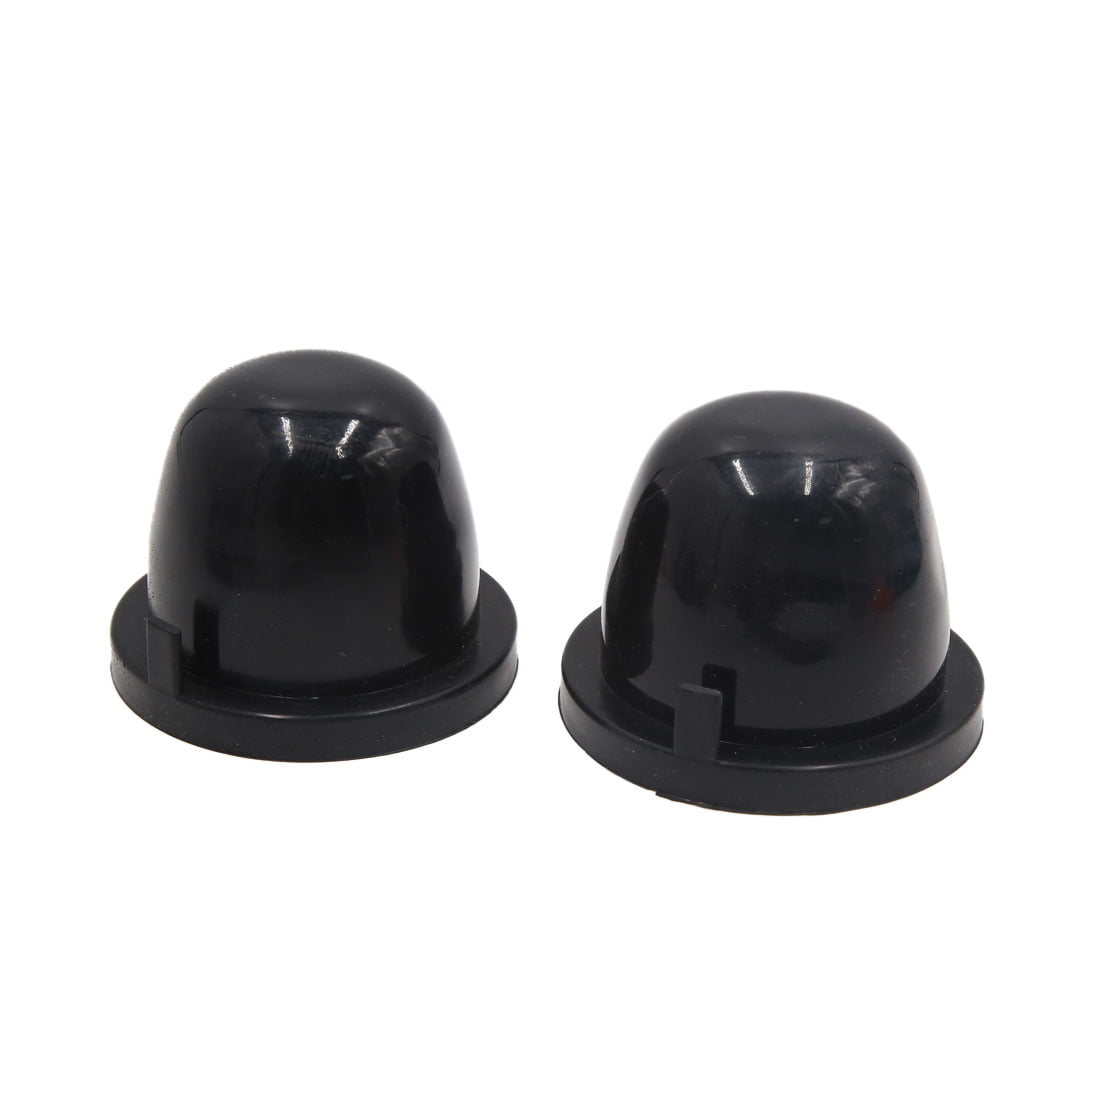 2X Rubber 85mm Car Headlight Dust Housing Cover Kit For HID Bulb Bowl Seal Cap 